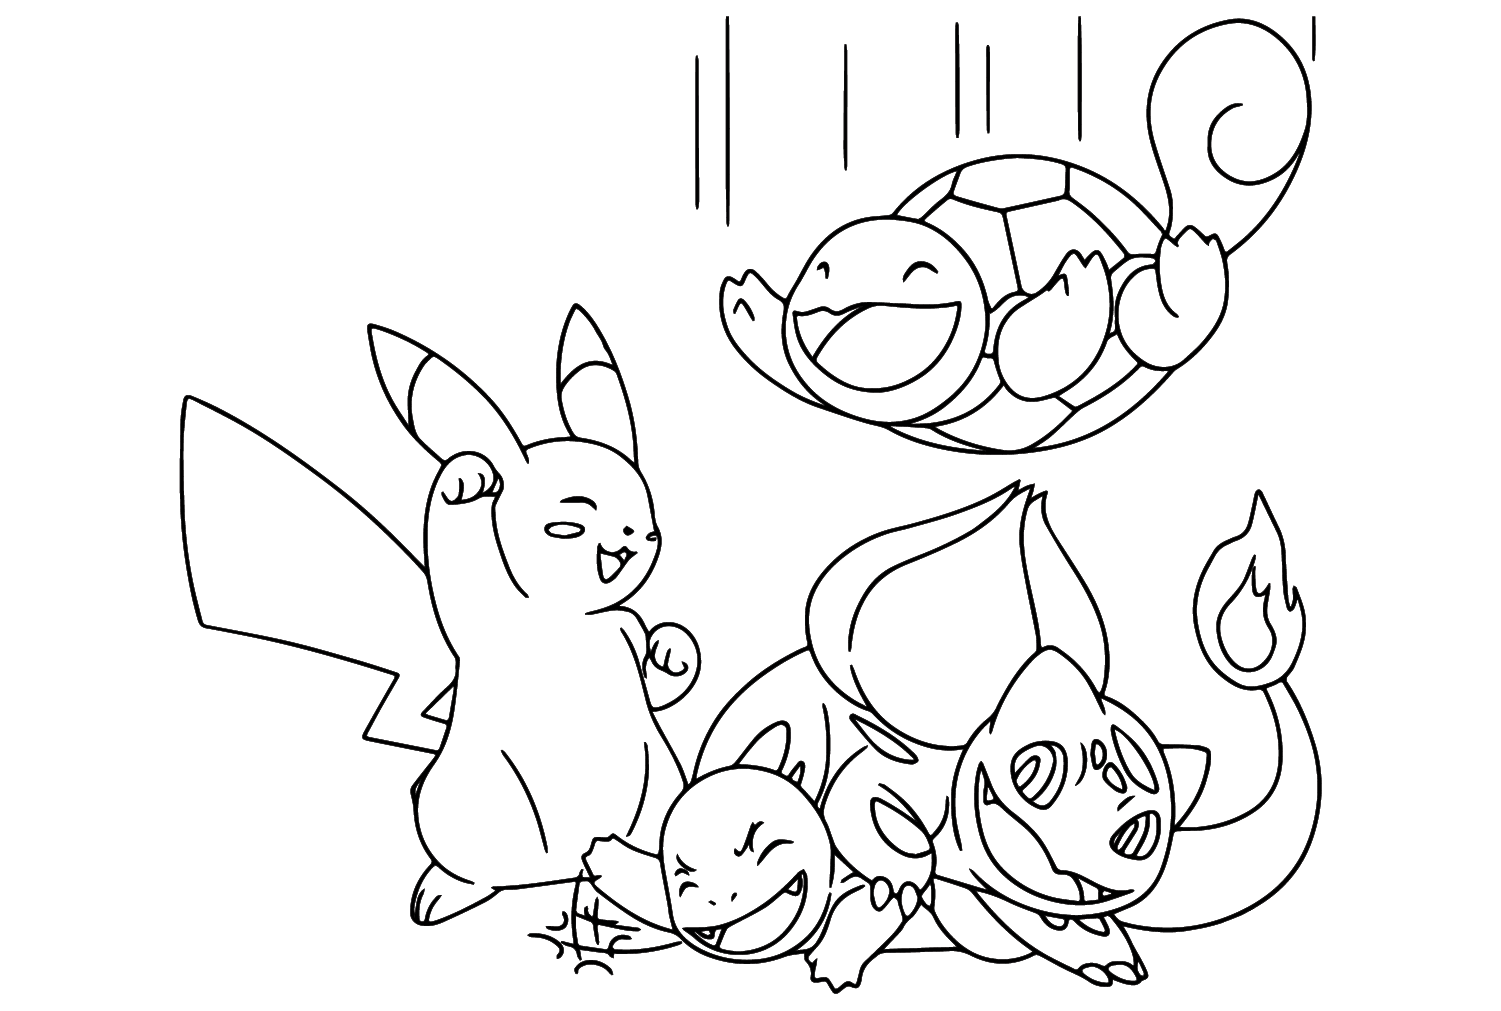 Pikachu und Squirtle, Charmander, Bulbasaur Malseite